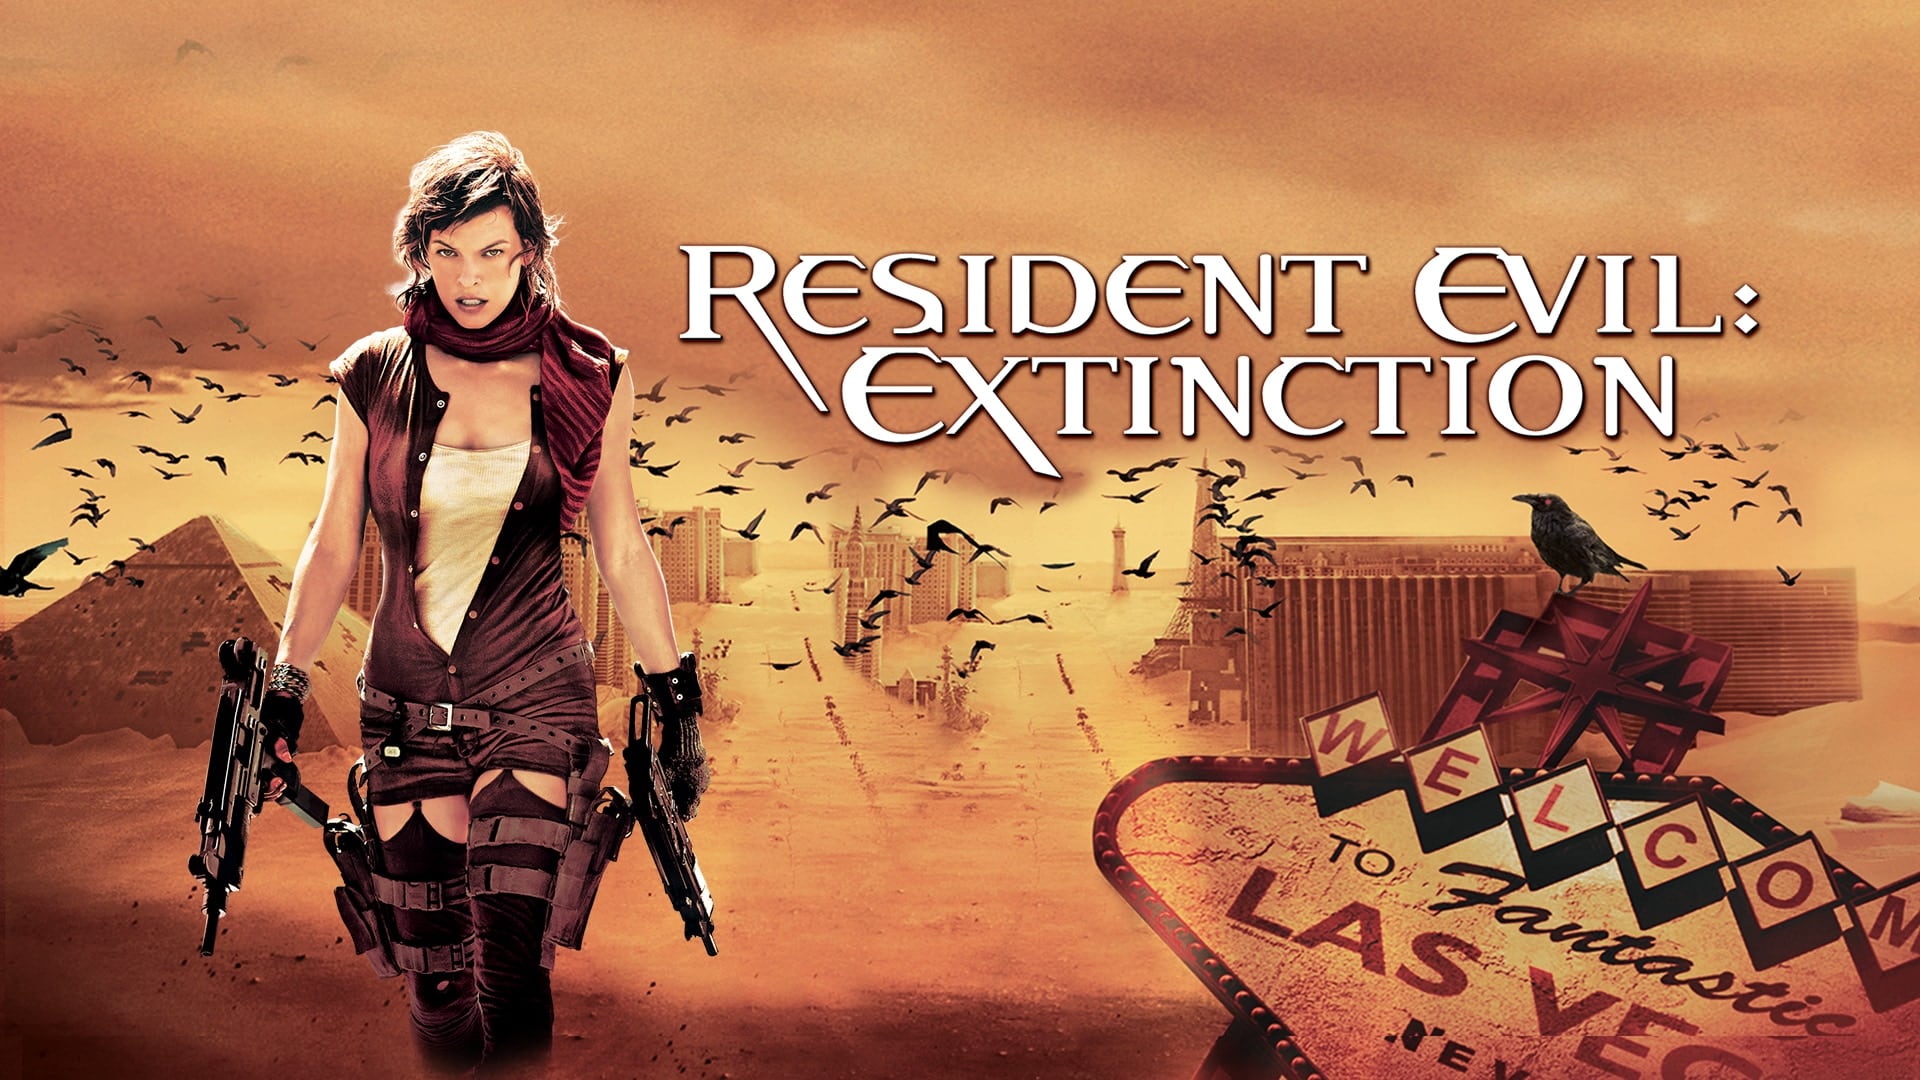 Watch Resident Evil: Extinction Online | Stream Full Movies